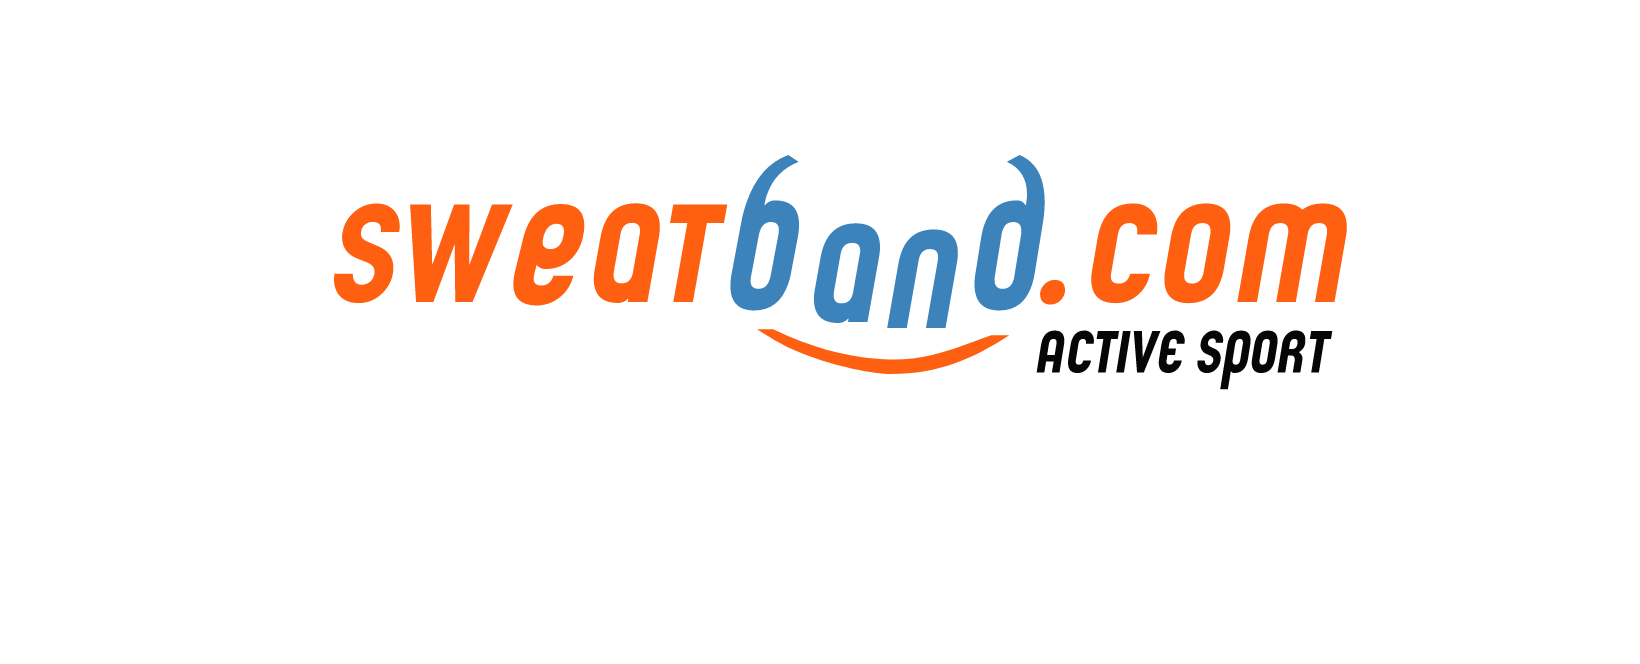 Sweatband Discount Code 2022